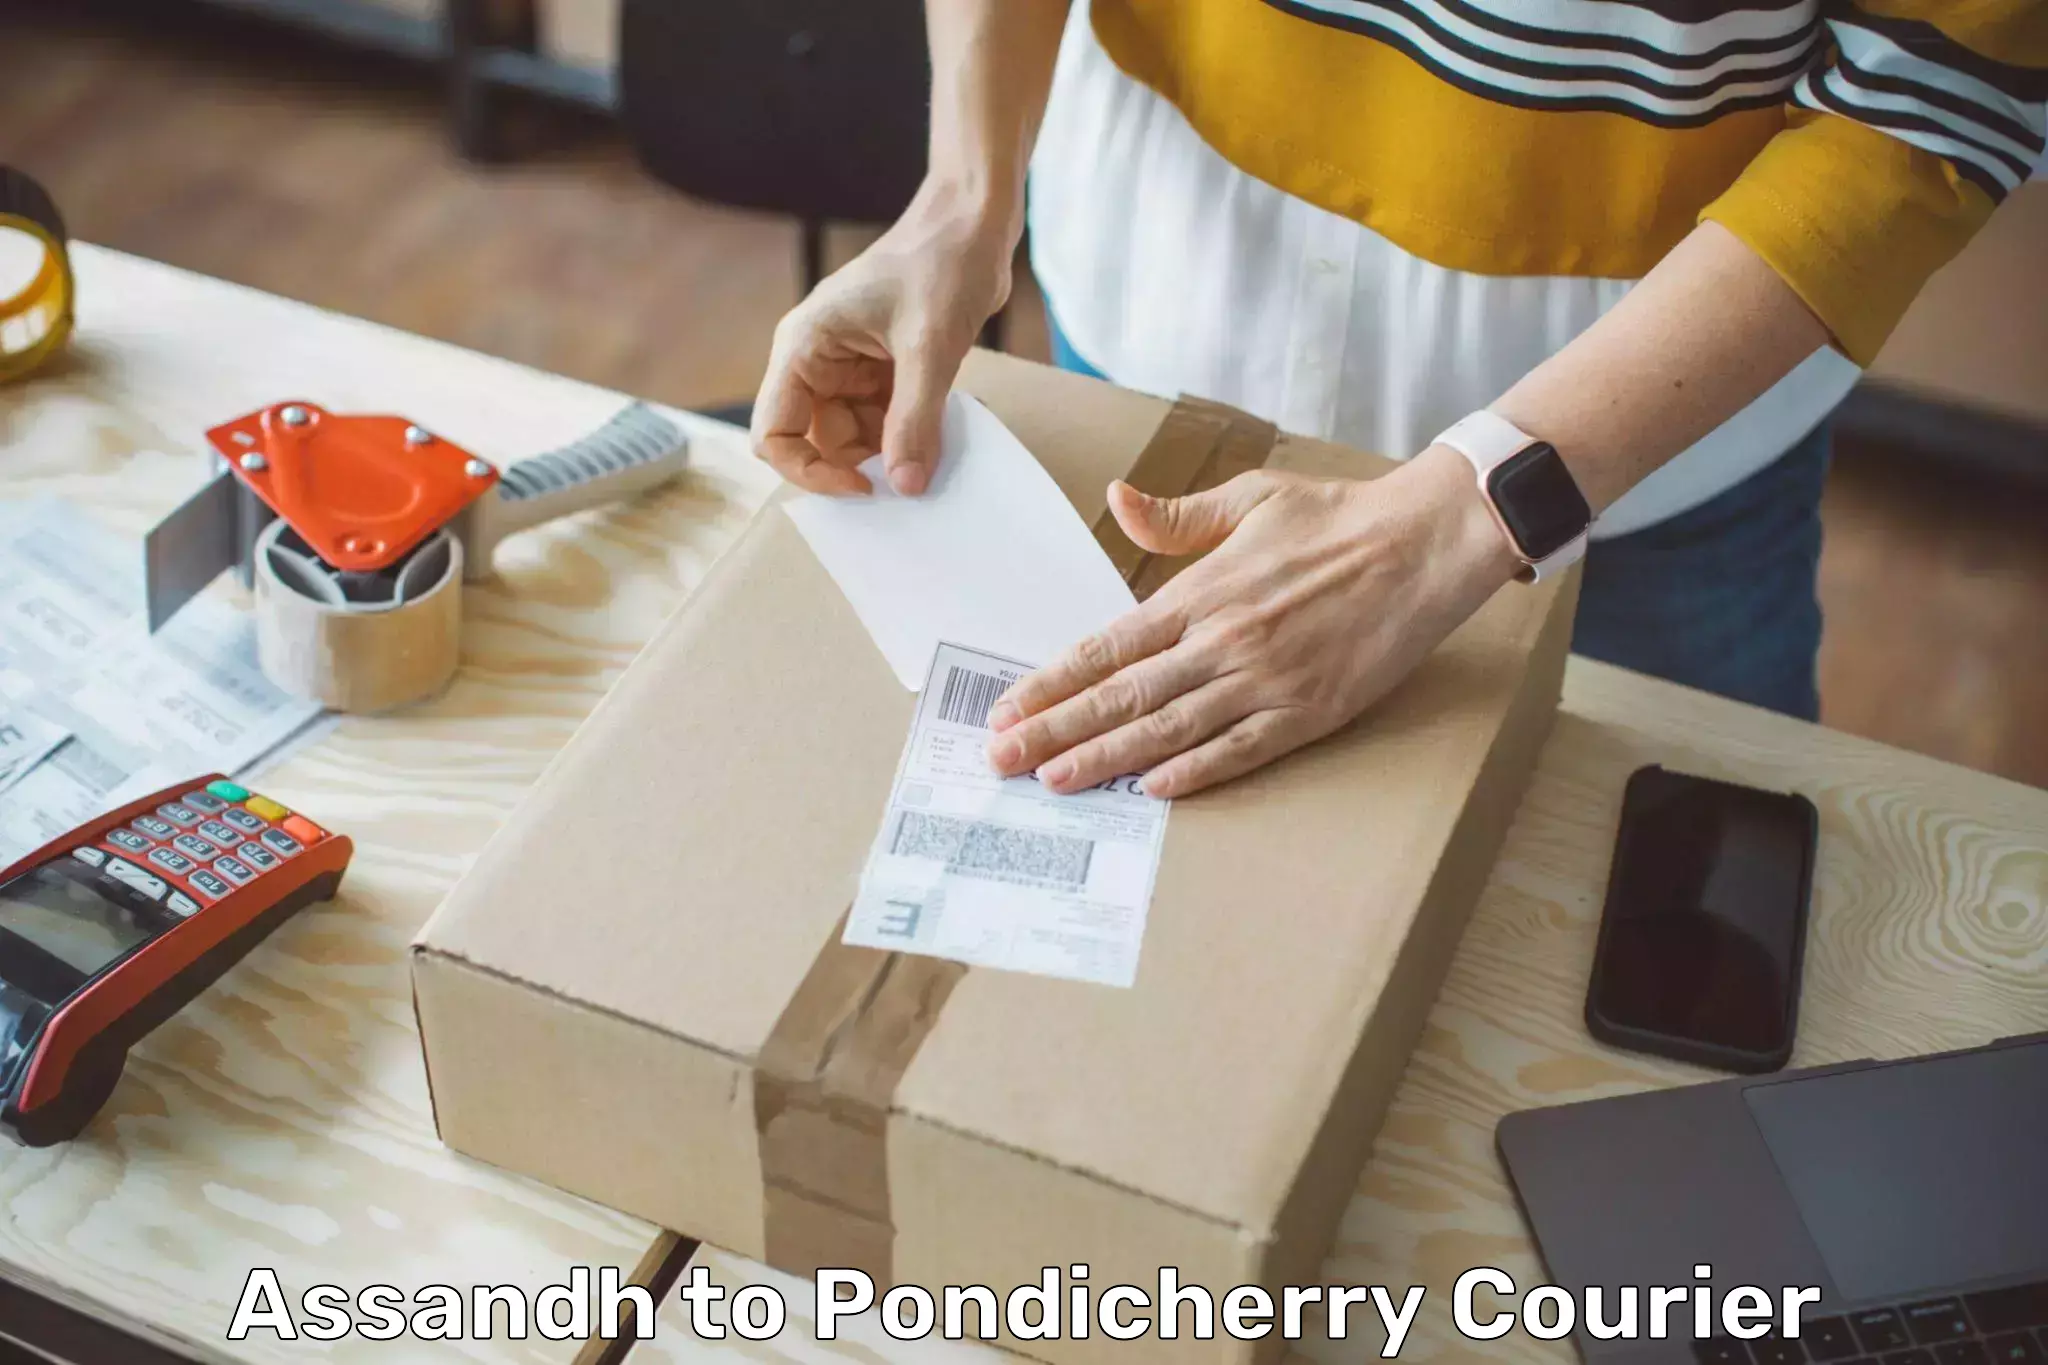 Professional courier handling Assandh to Pondicherry University